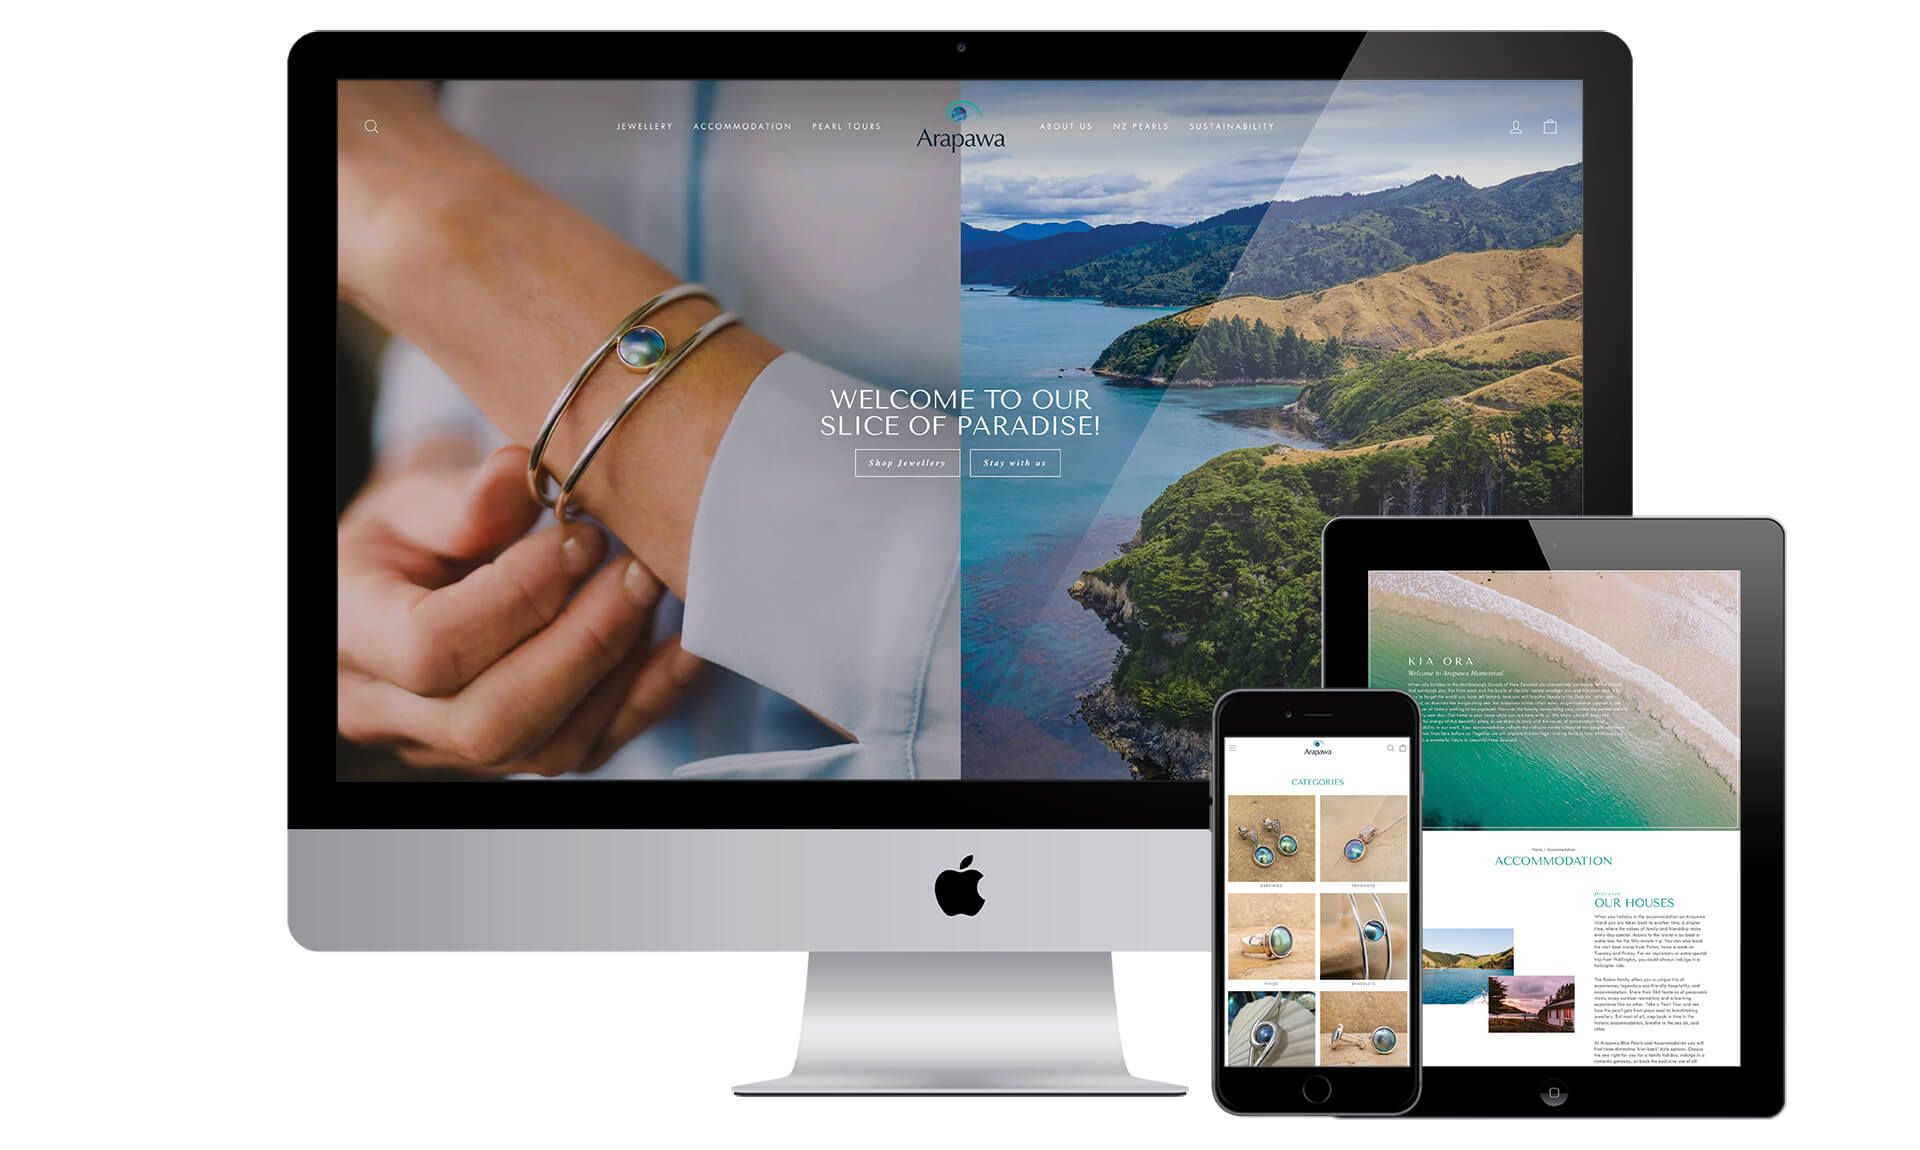 Arapawa Blue Pearls and Accommodation website designed by Vanilla Hayes creative graphic design  studio in Blenheim, Marlborough, New Zealand